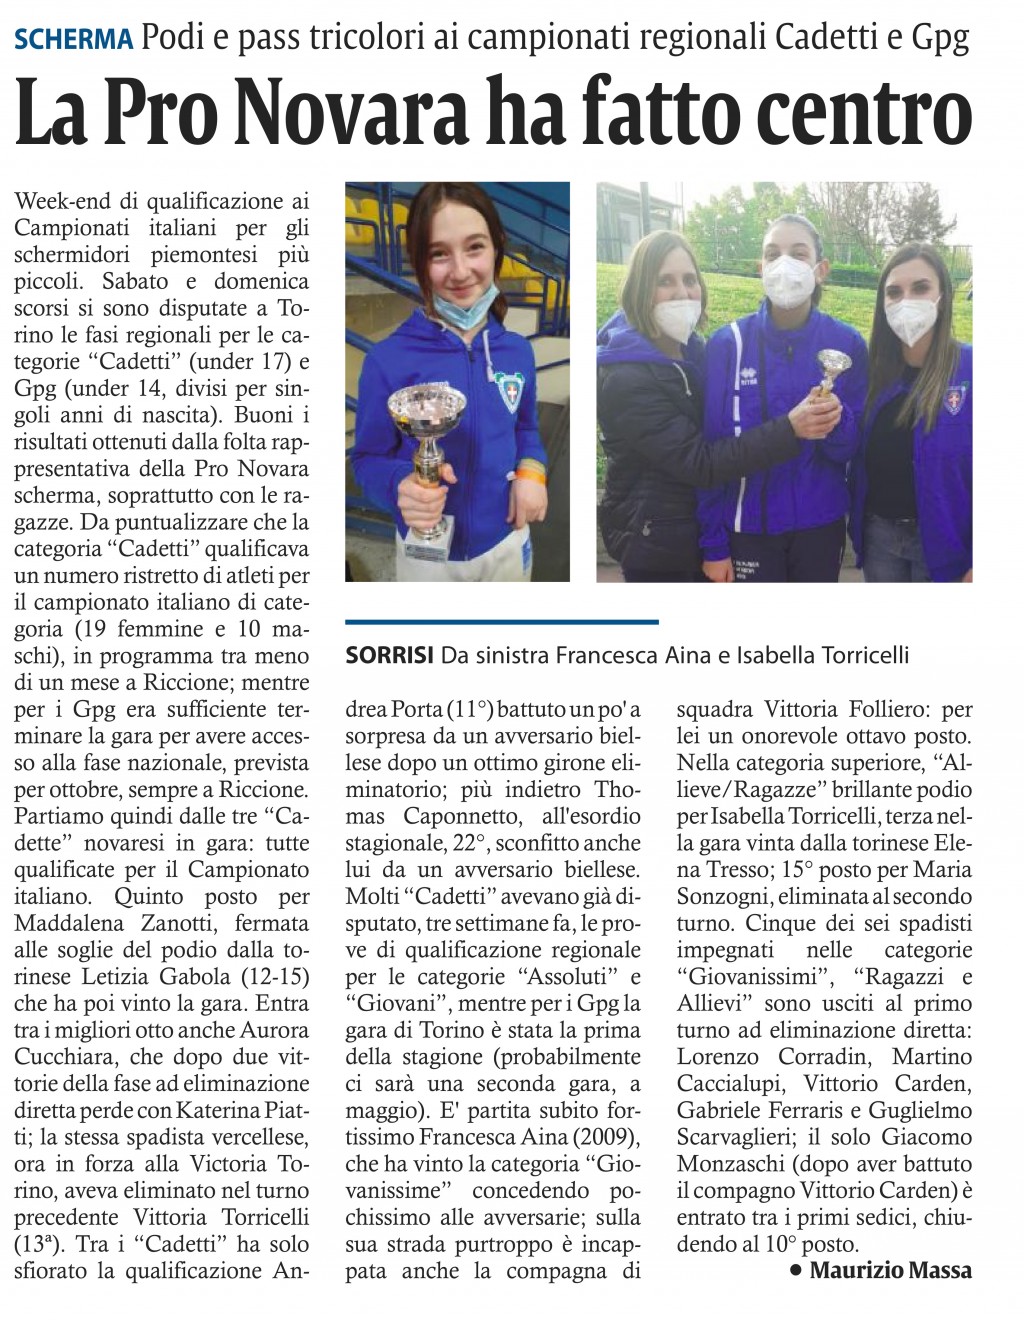 Corriere di Novara - 15-04-2021 - Pronovara 